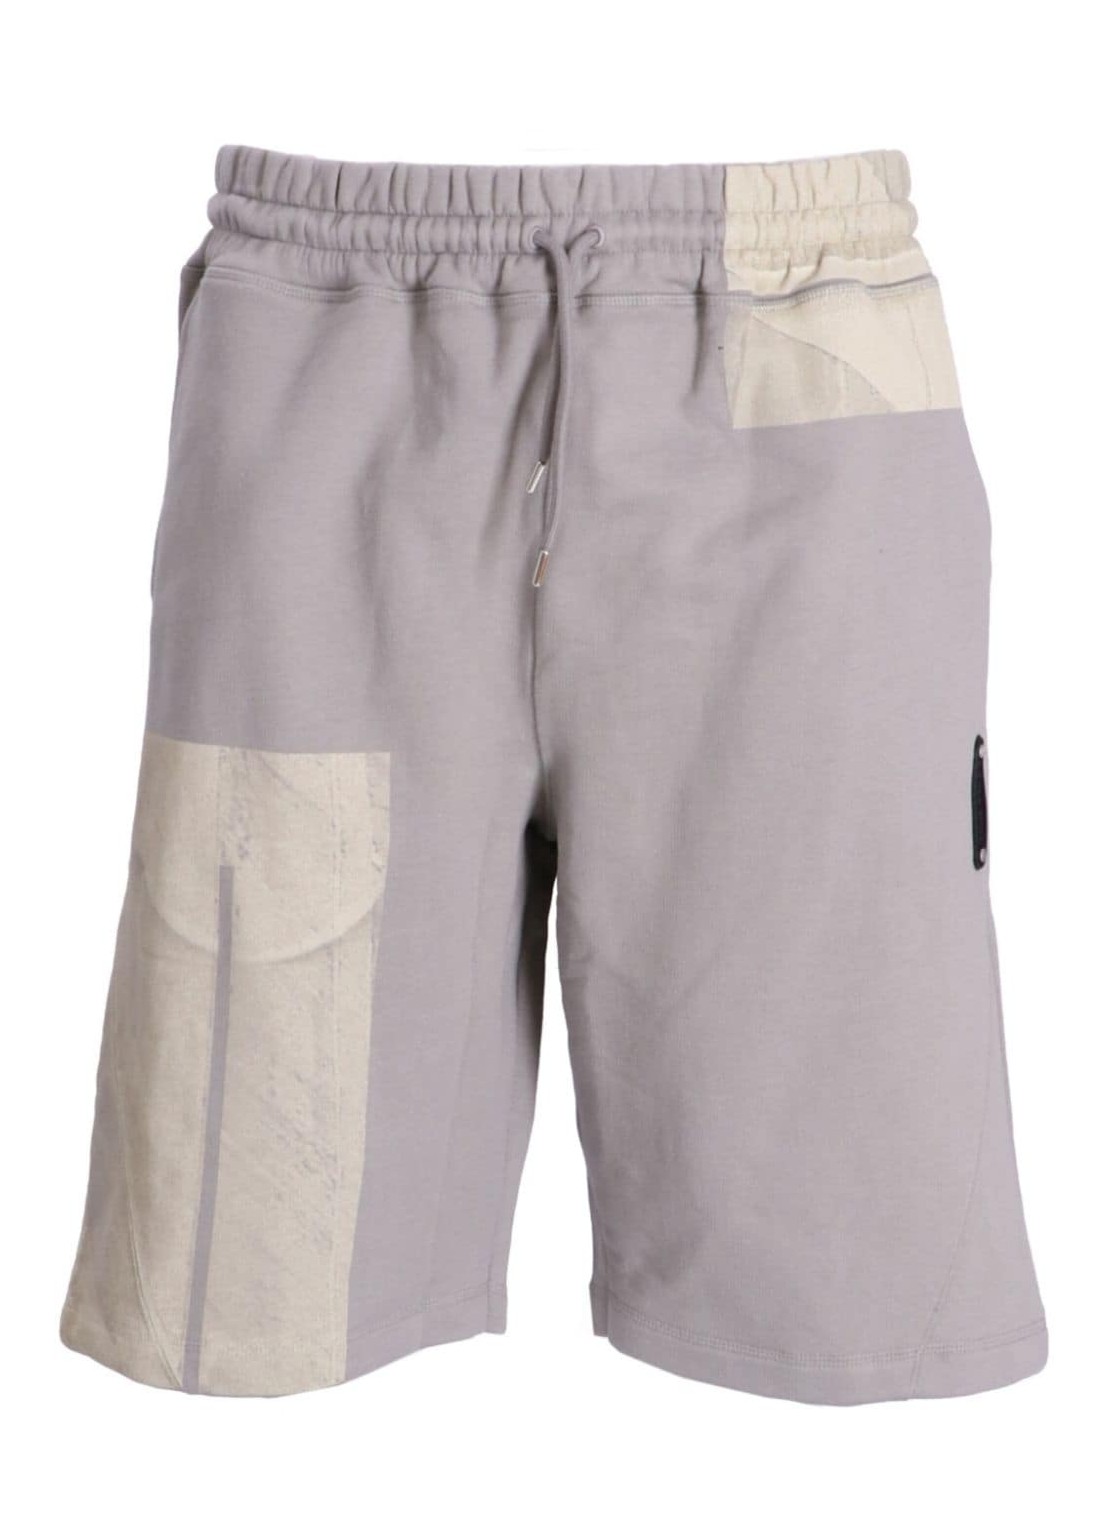 Pantalon corto a-cold-wall* short pant man strand sweatshort acwmb282 cement cemt talla XL
 